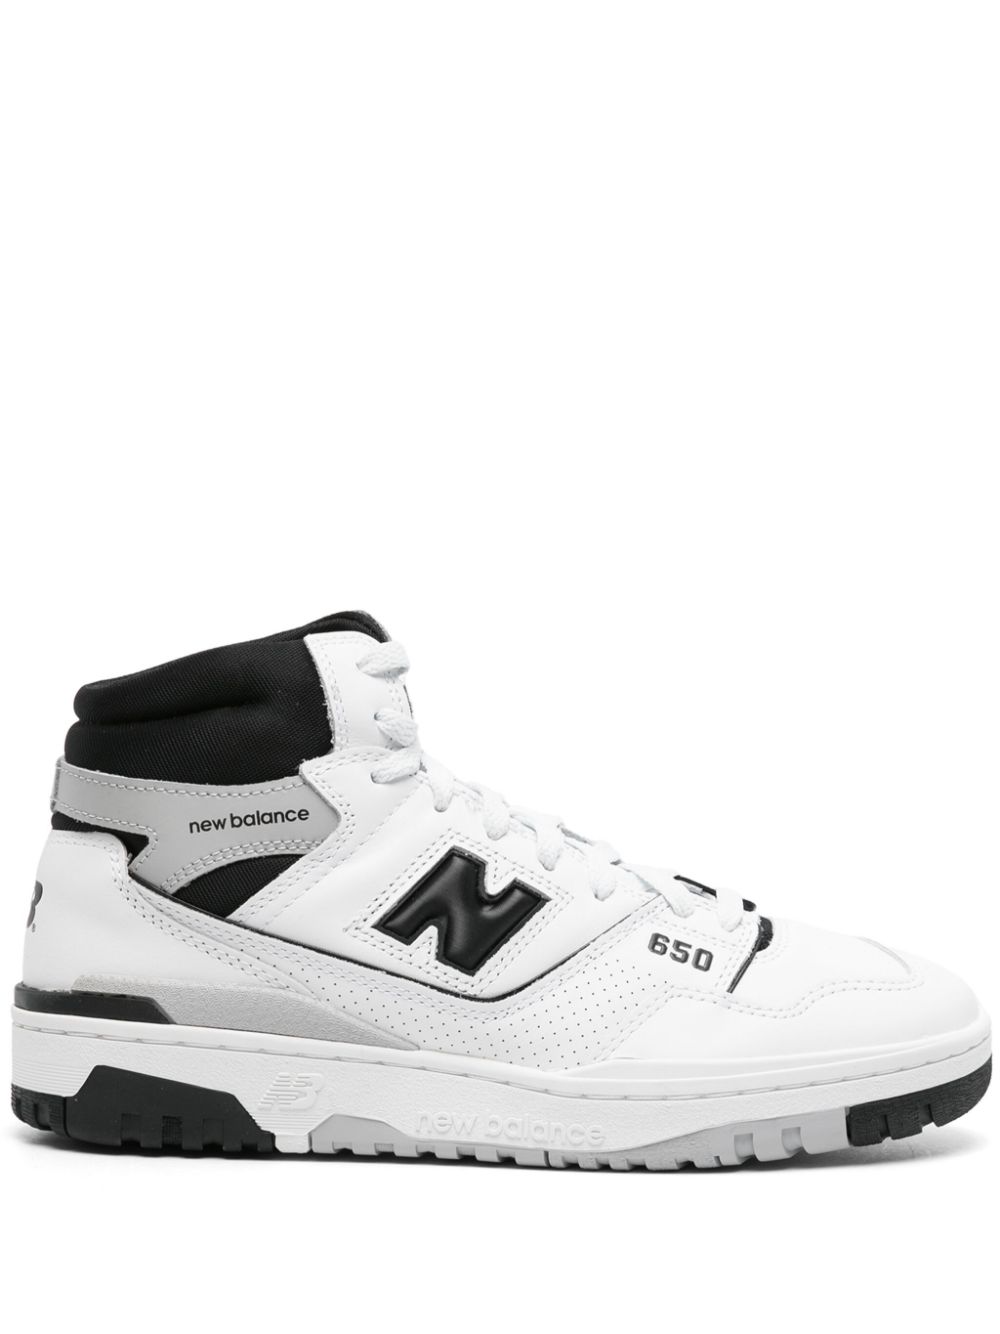 New Balance 650 high-top sneakers - White von New Balance